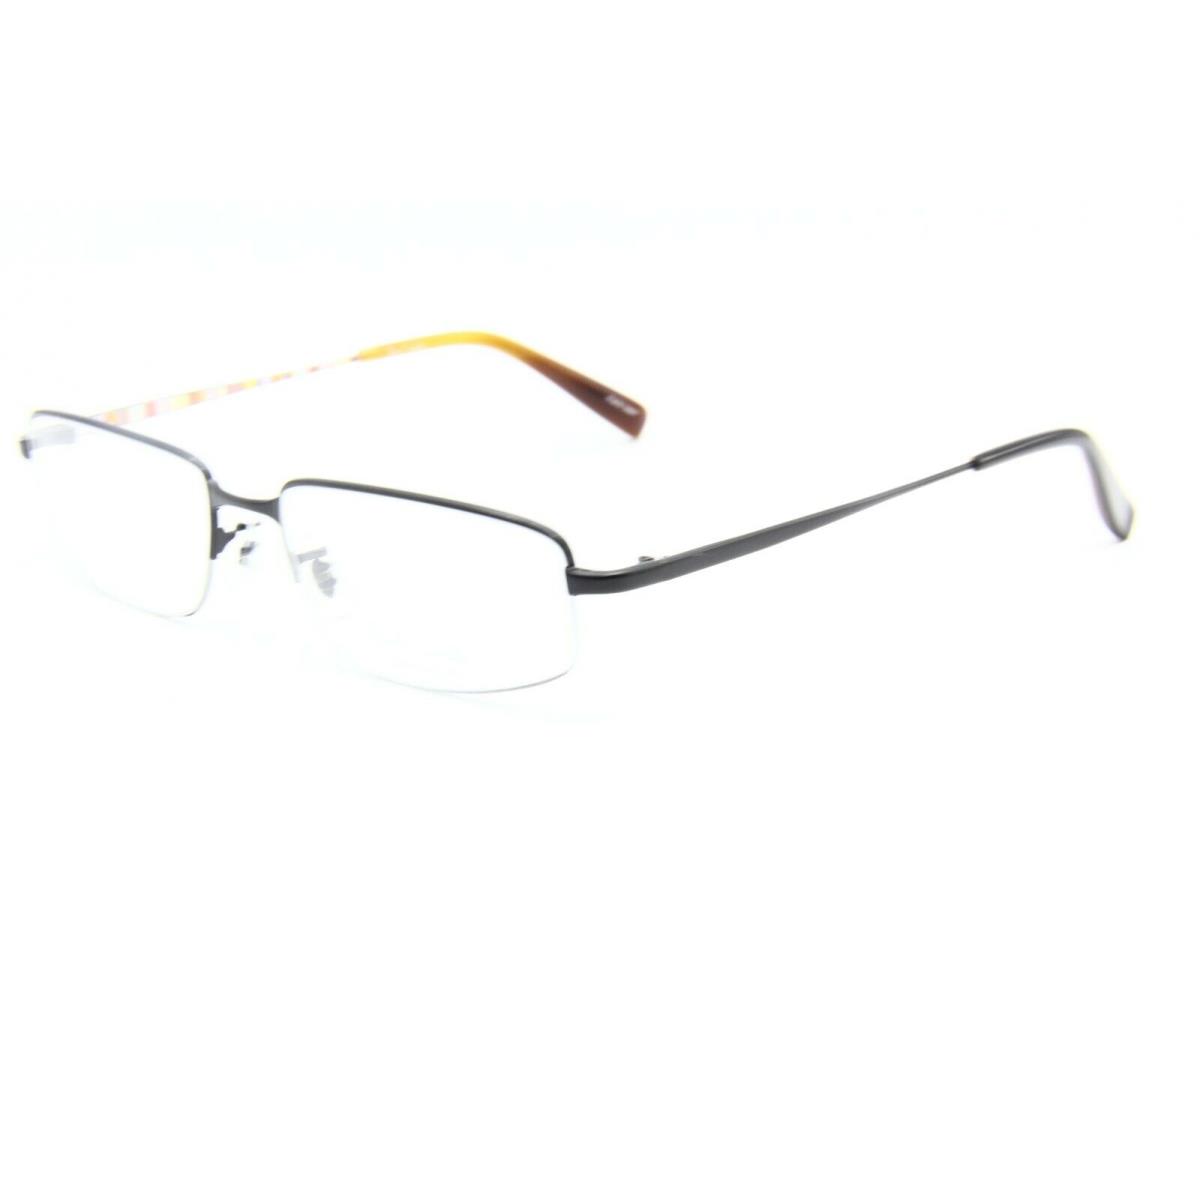 Paul Smith PS-1005 OX Black Eyeglasses Frame RX 51-17